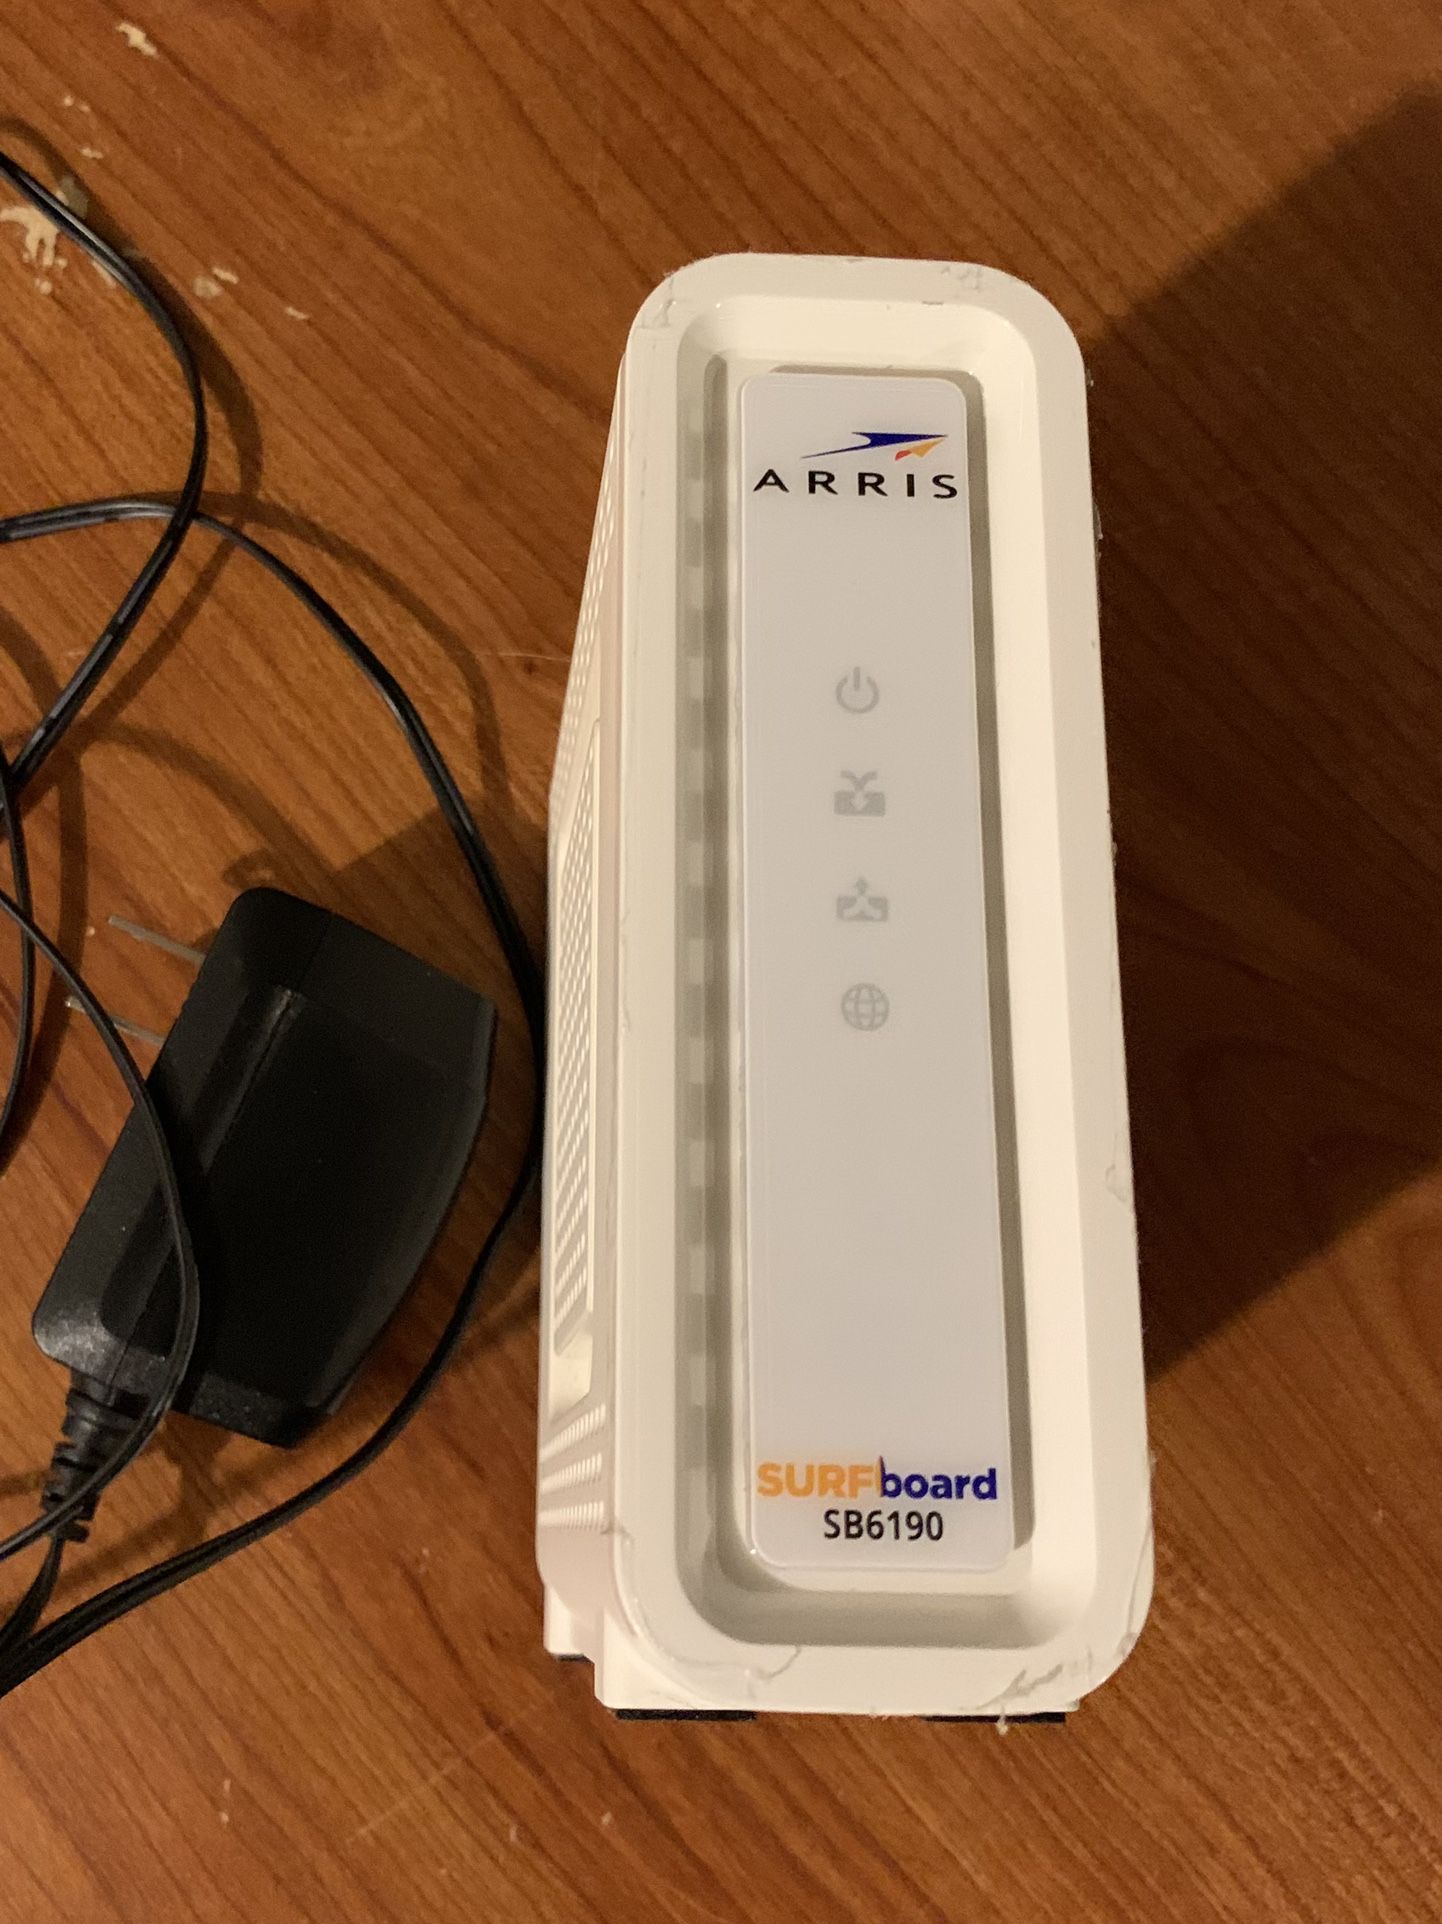 ARRIS Cable modem Surfboard SB6190